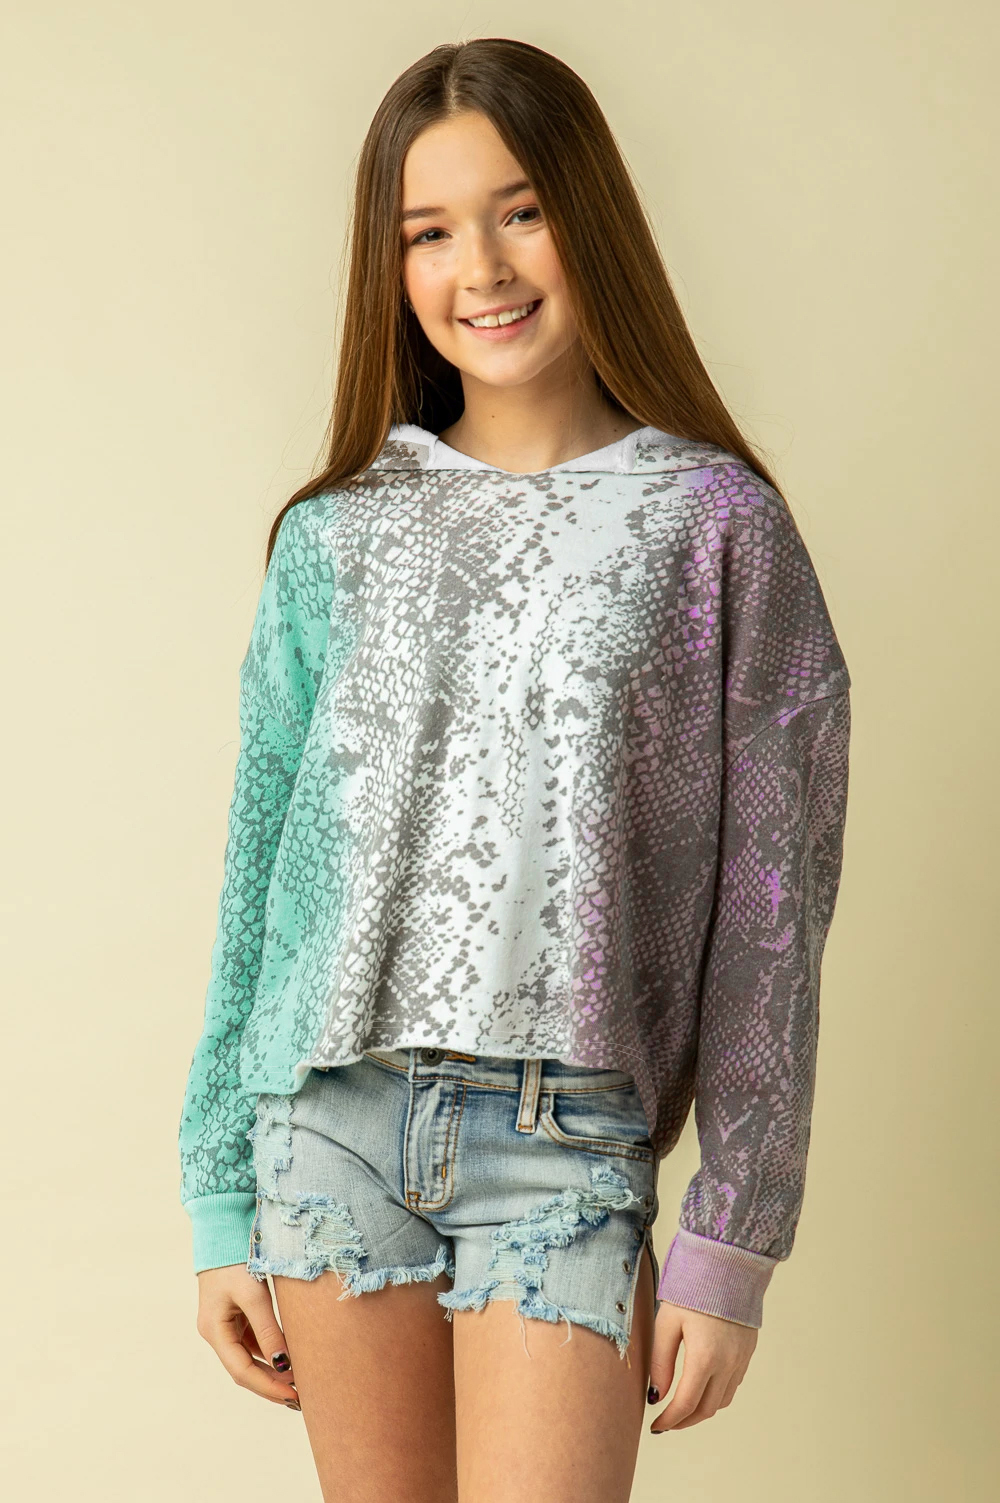 Snake Animal Print Tie Dye Girls Hoodies for Autumn Children 7-14Years Sweatshirts Rainbow Teenagers Overiszed Hoodies